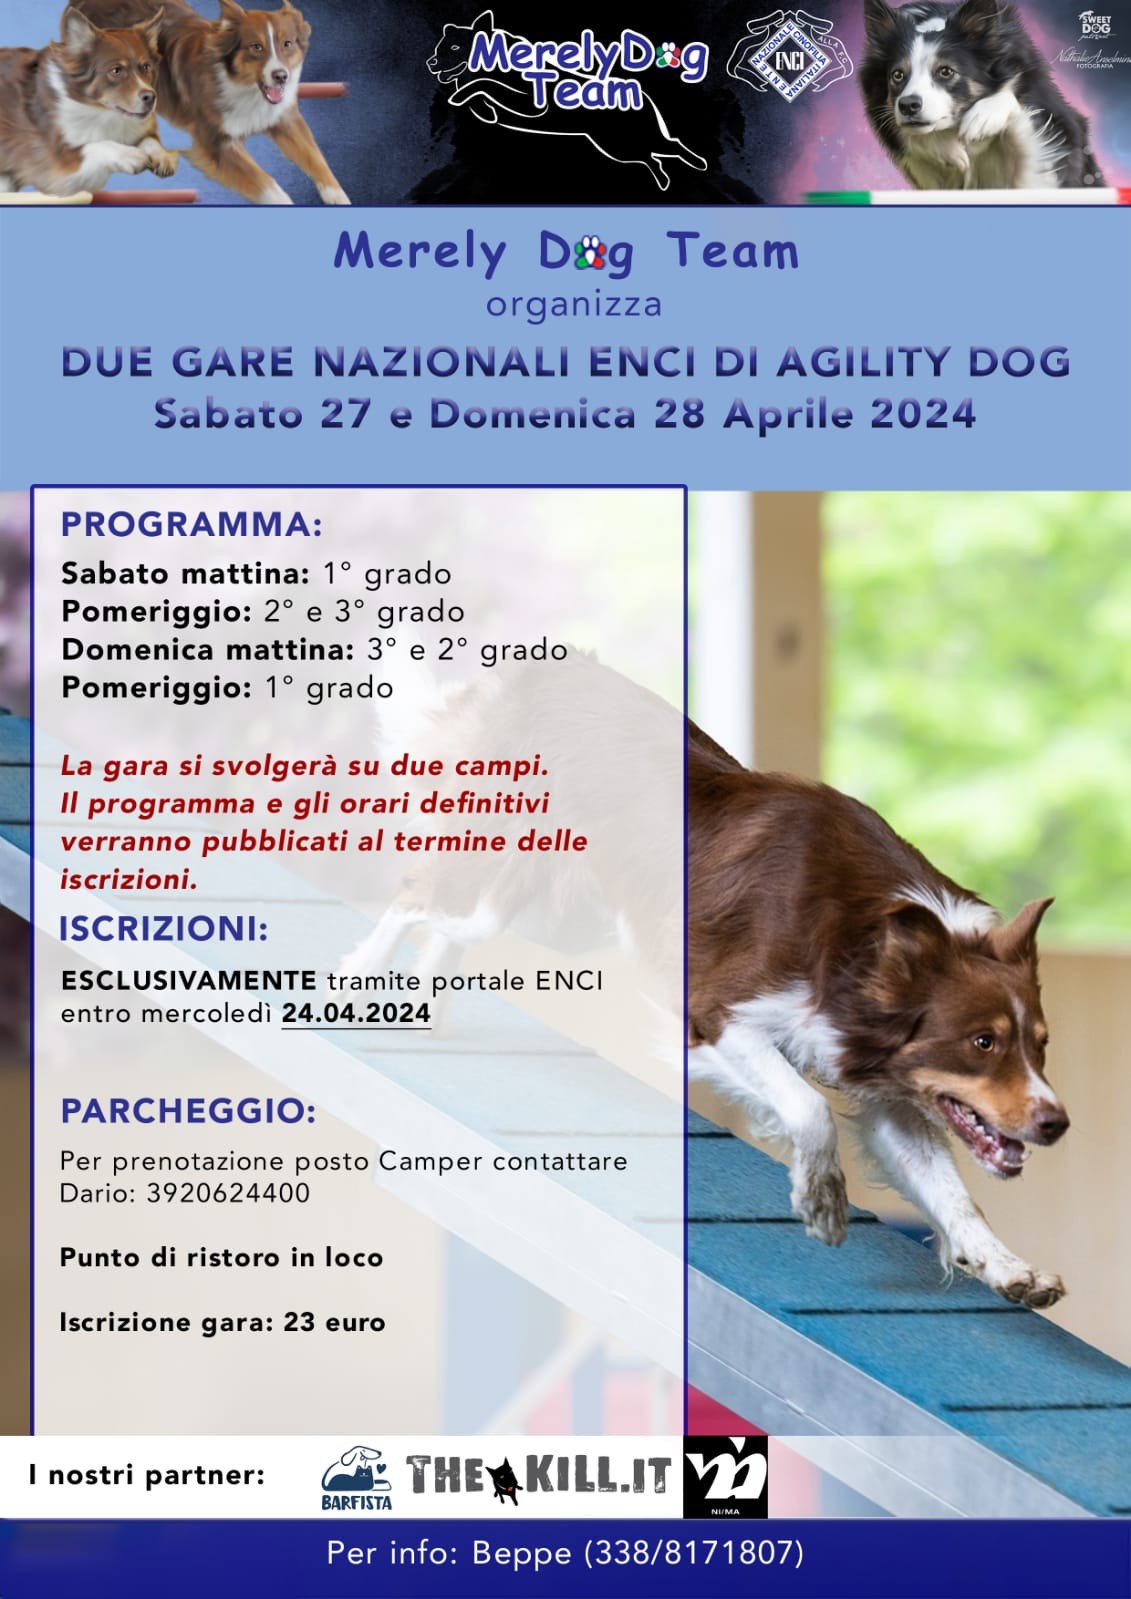 Merely Dog Team organizza Sabato 27 Aprile